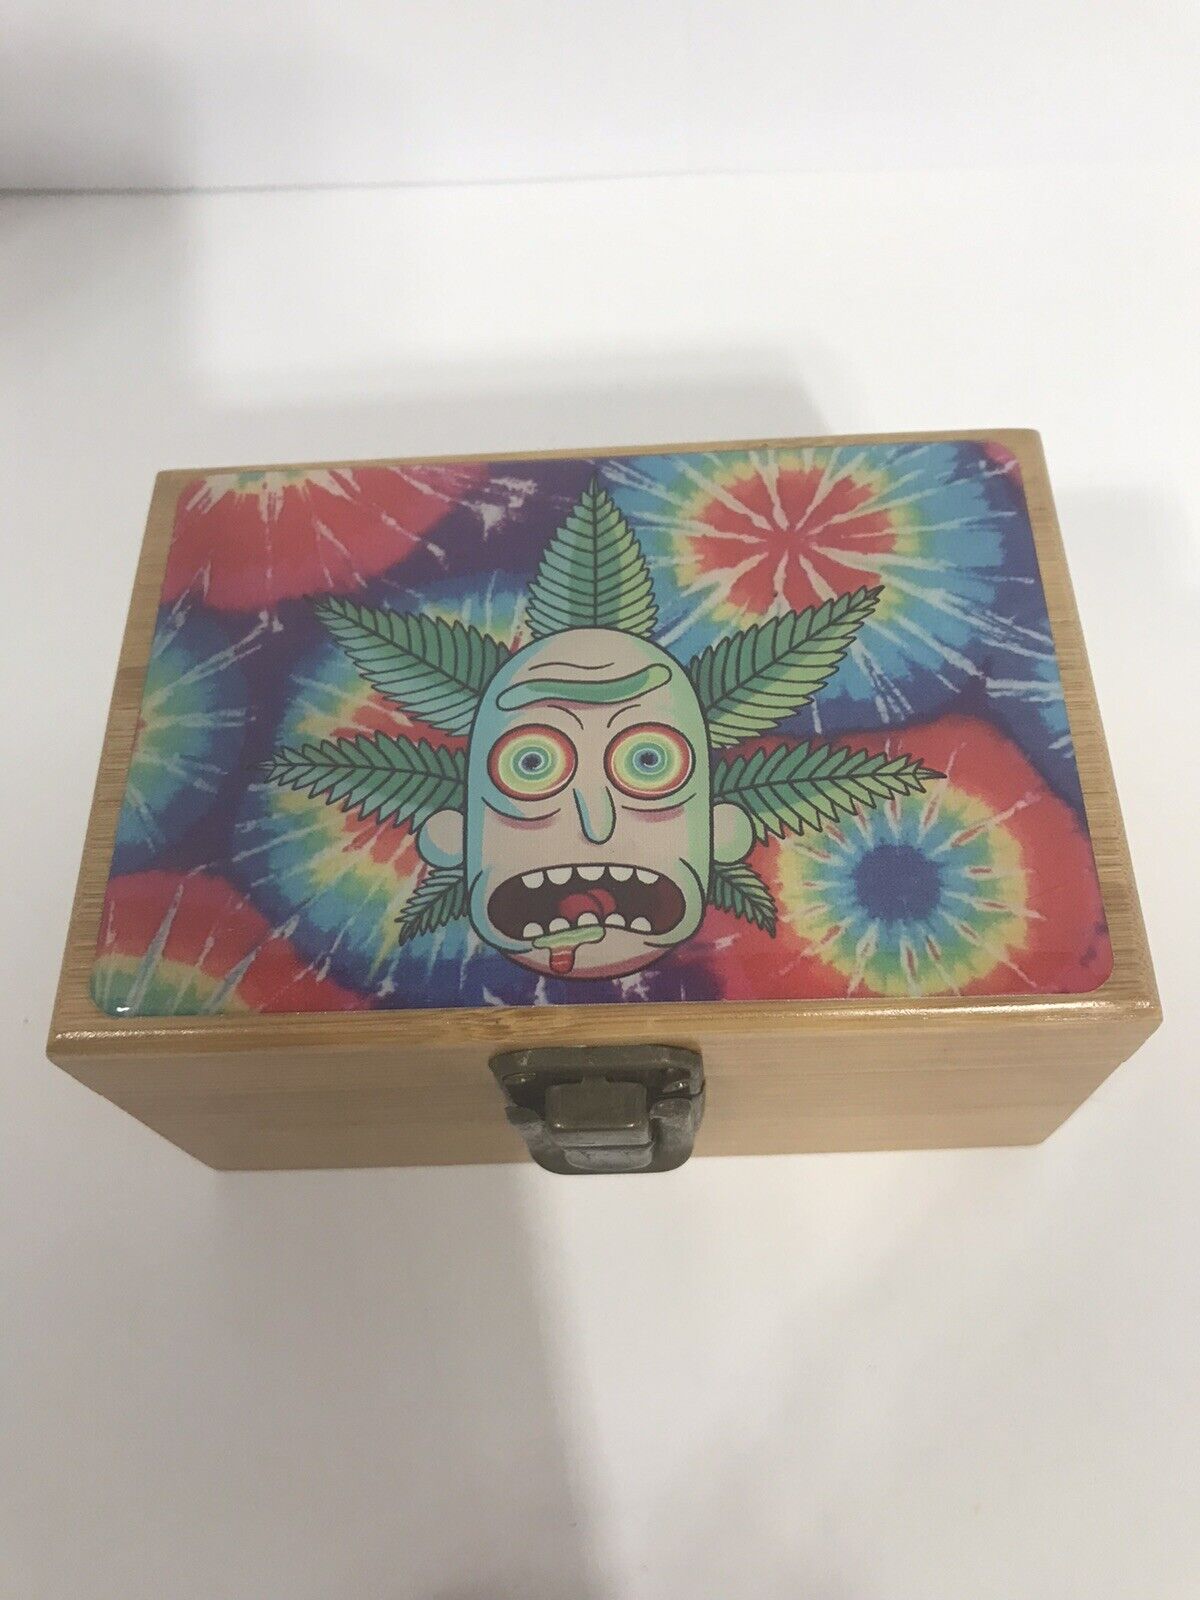 Wooden Psychadelic Keepsake Box With Metal Clasp